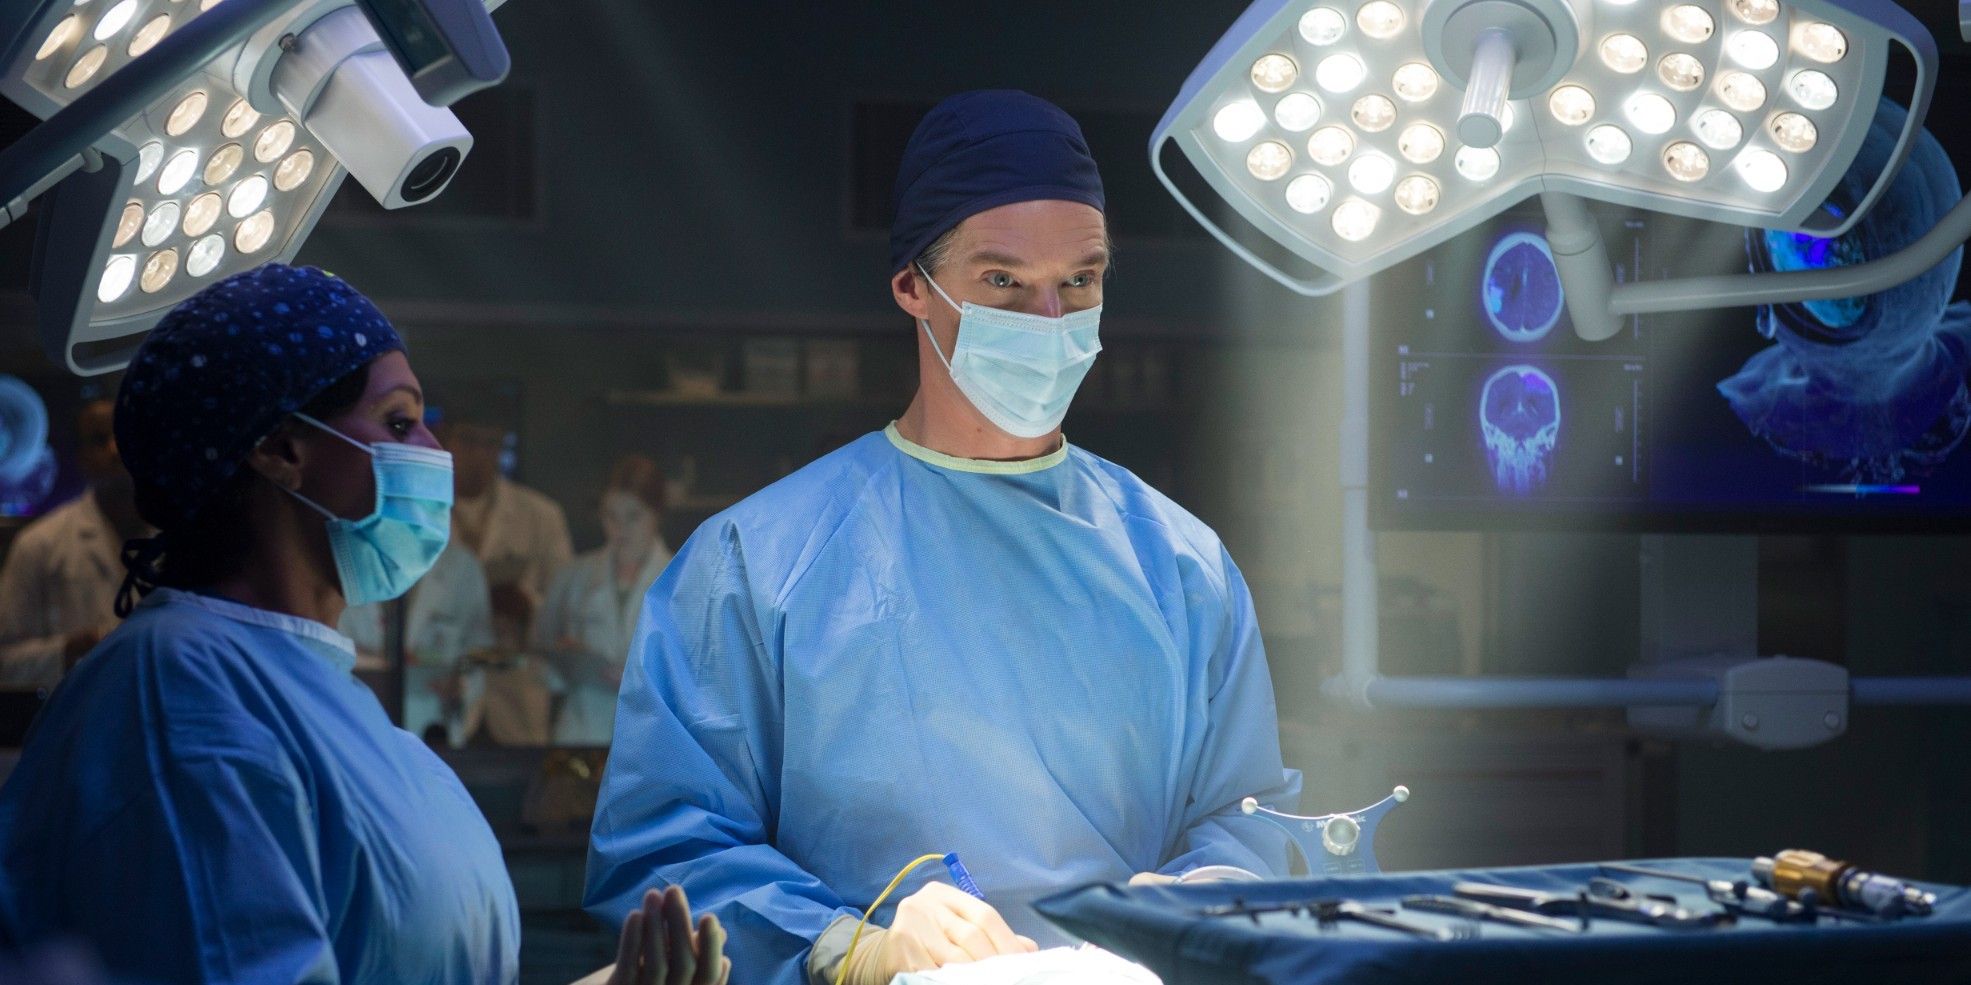 Dr. Strange working as a surgeon